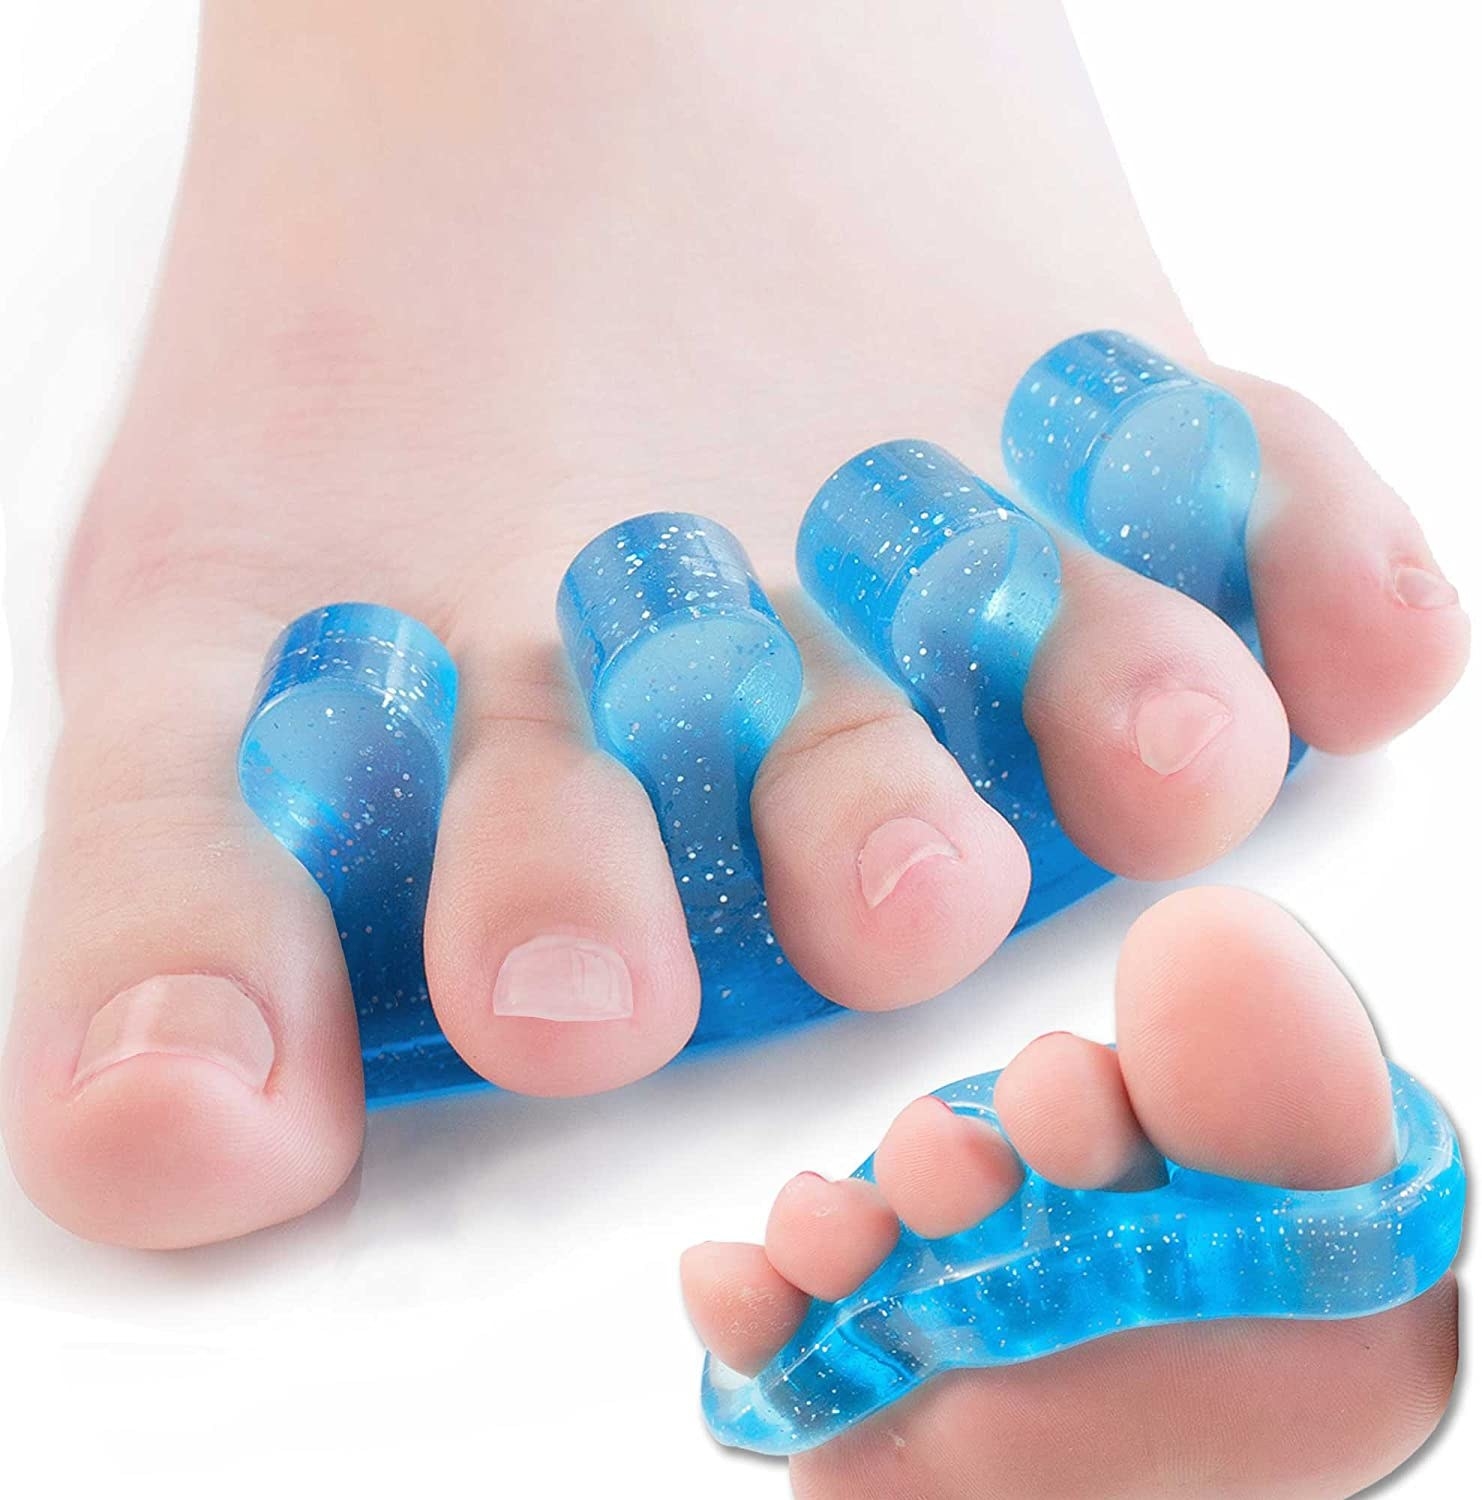 Two feet with gel separators between the toes